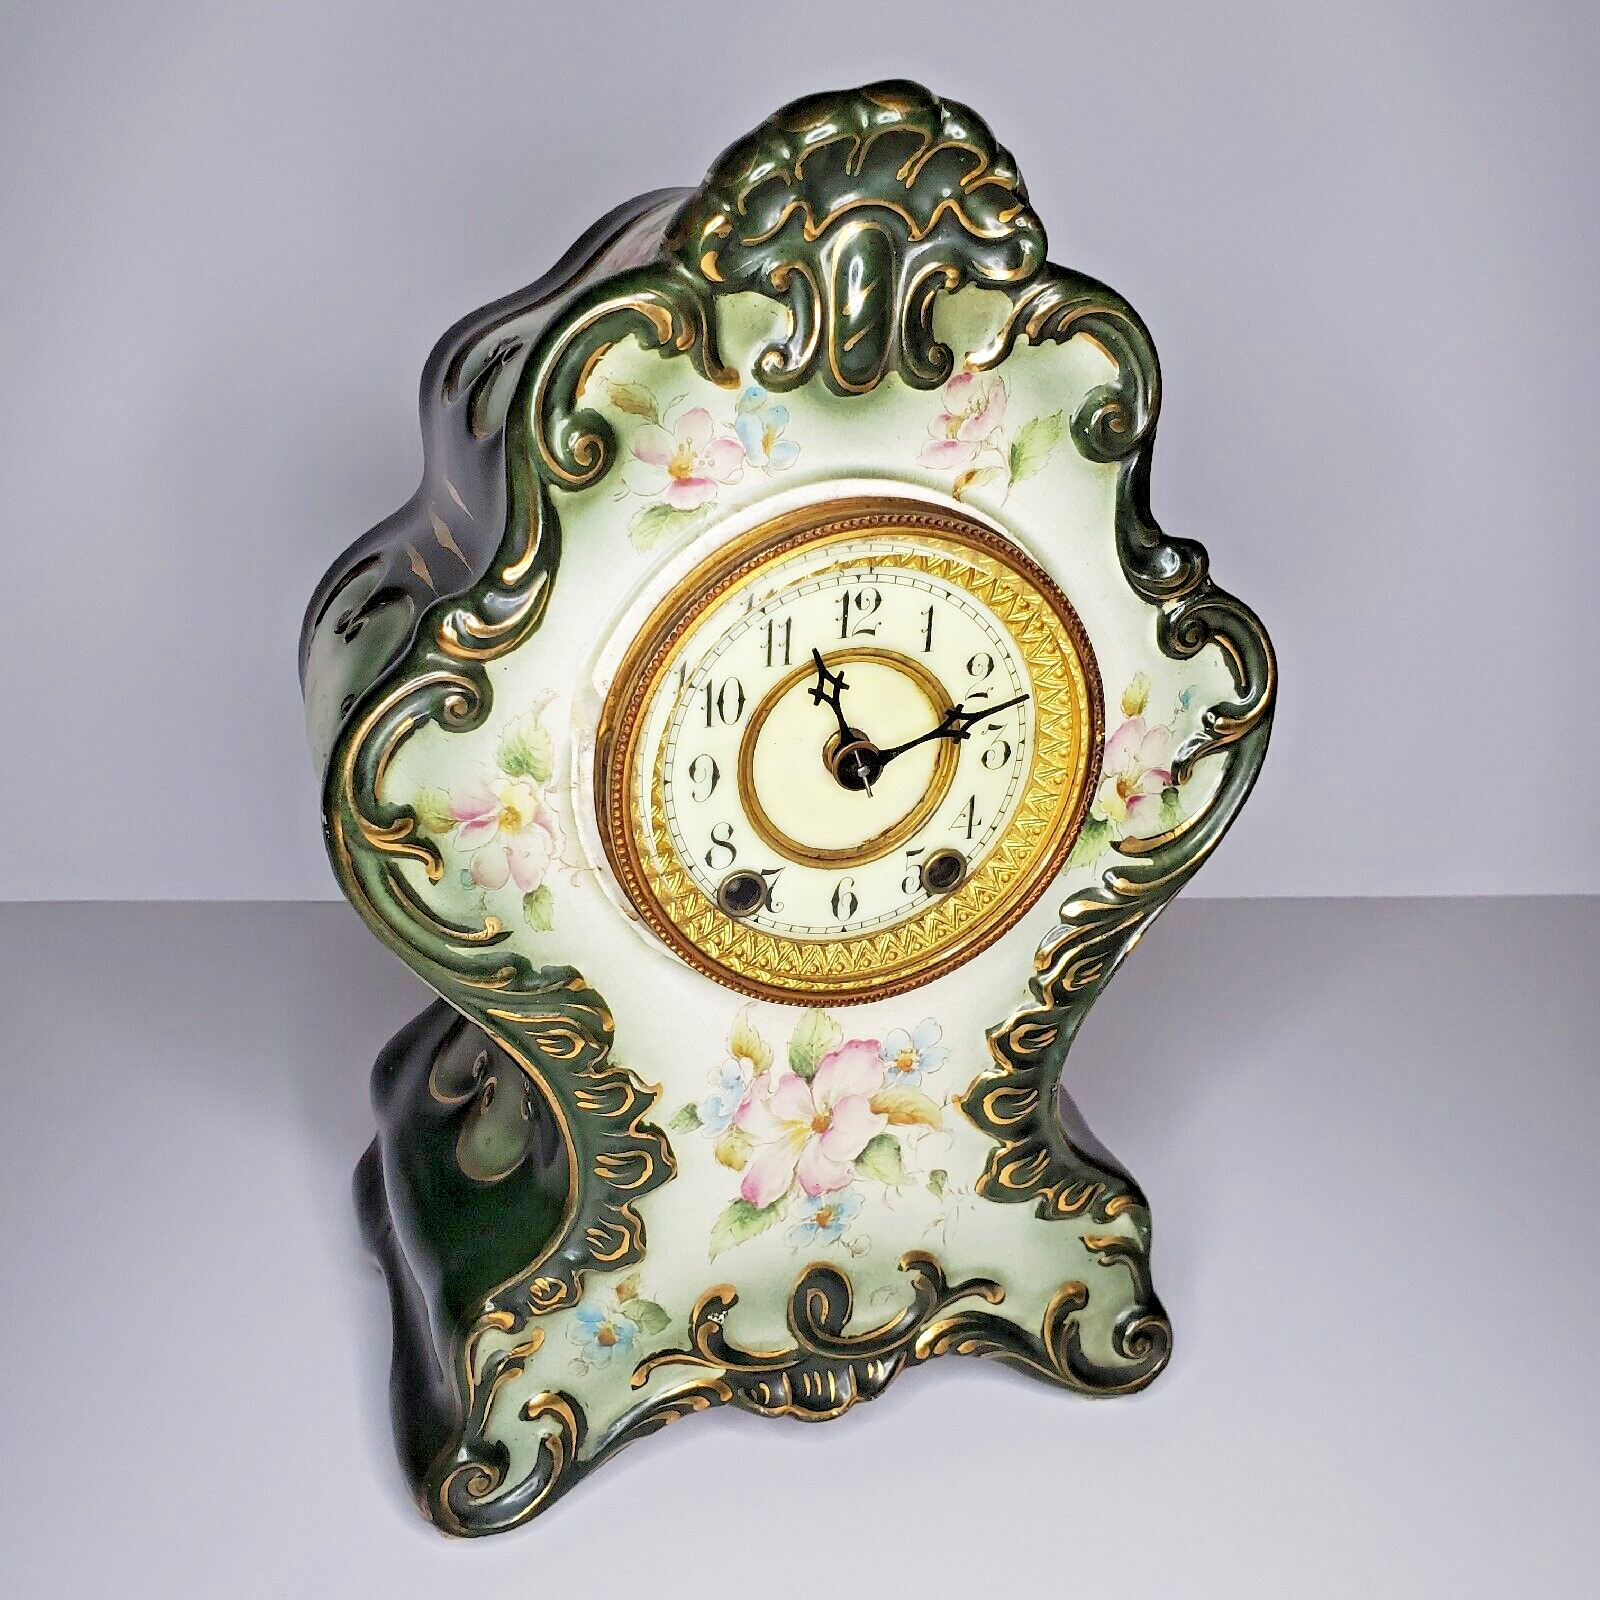 Antique Waterbury Porcelain Mantel Clock 1891 Parlor No. 90 w/ Original Label